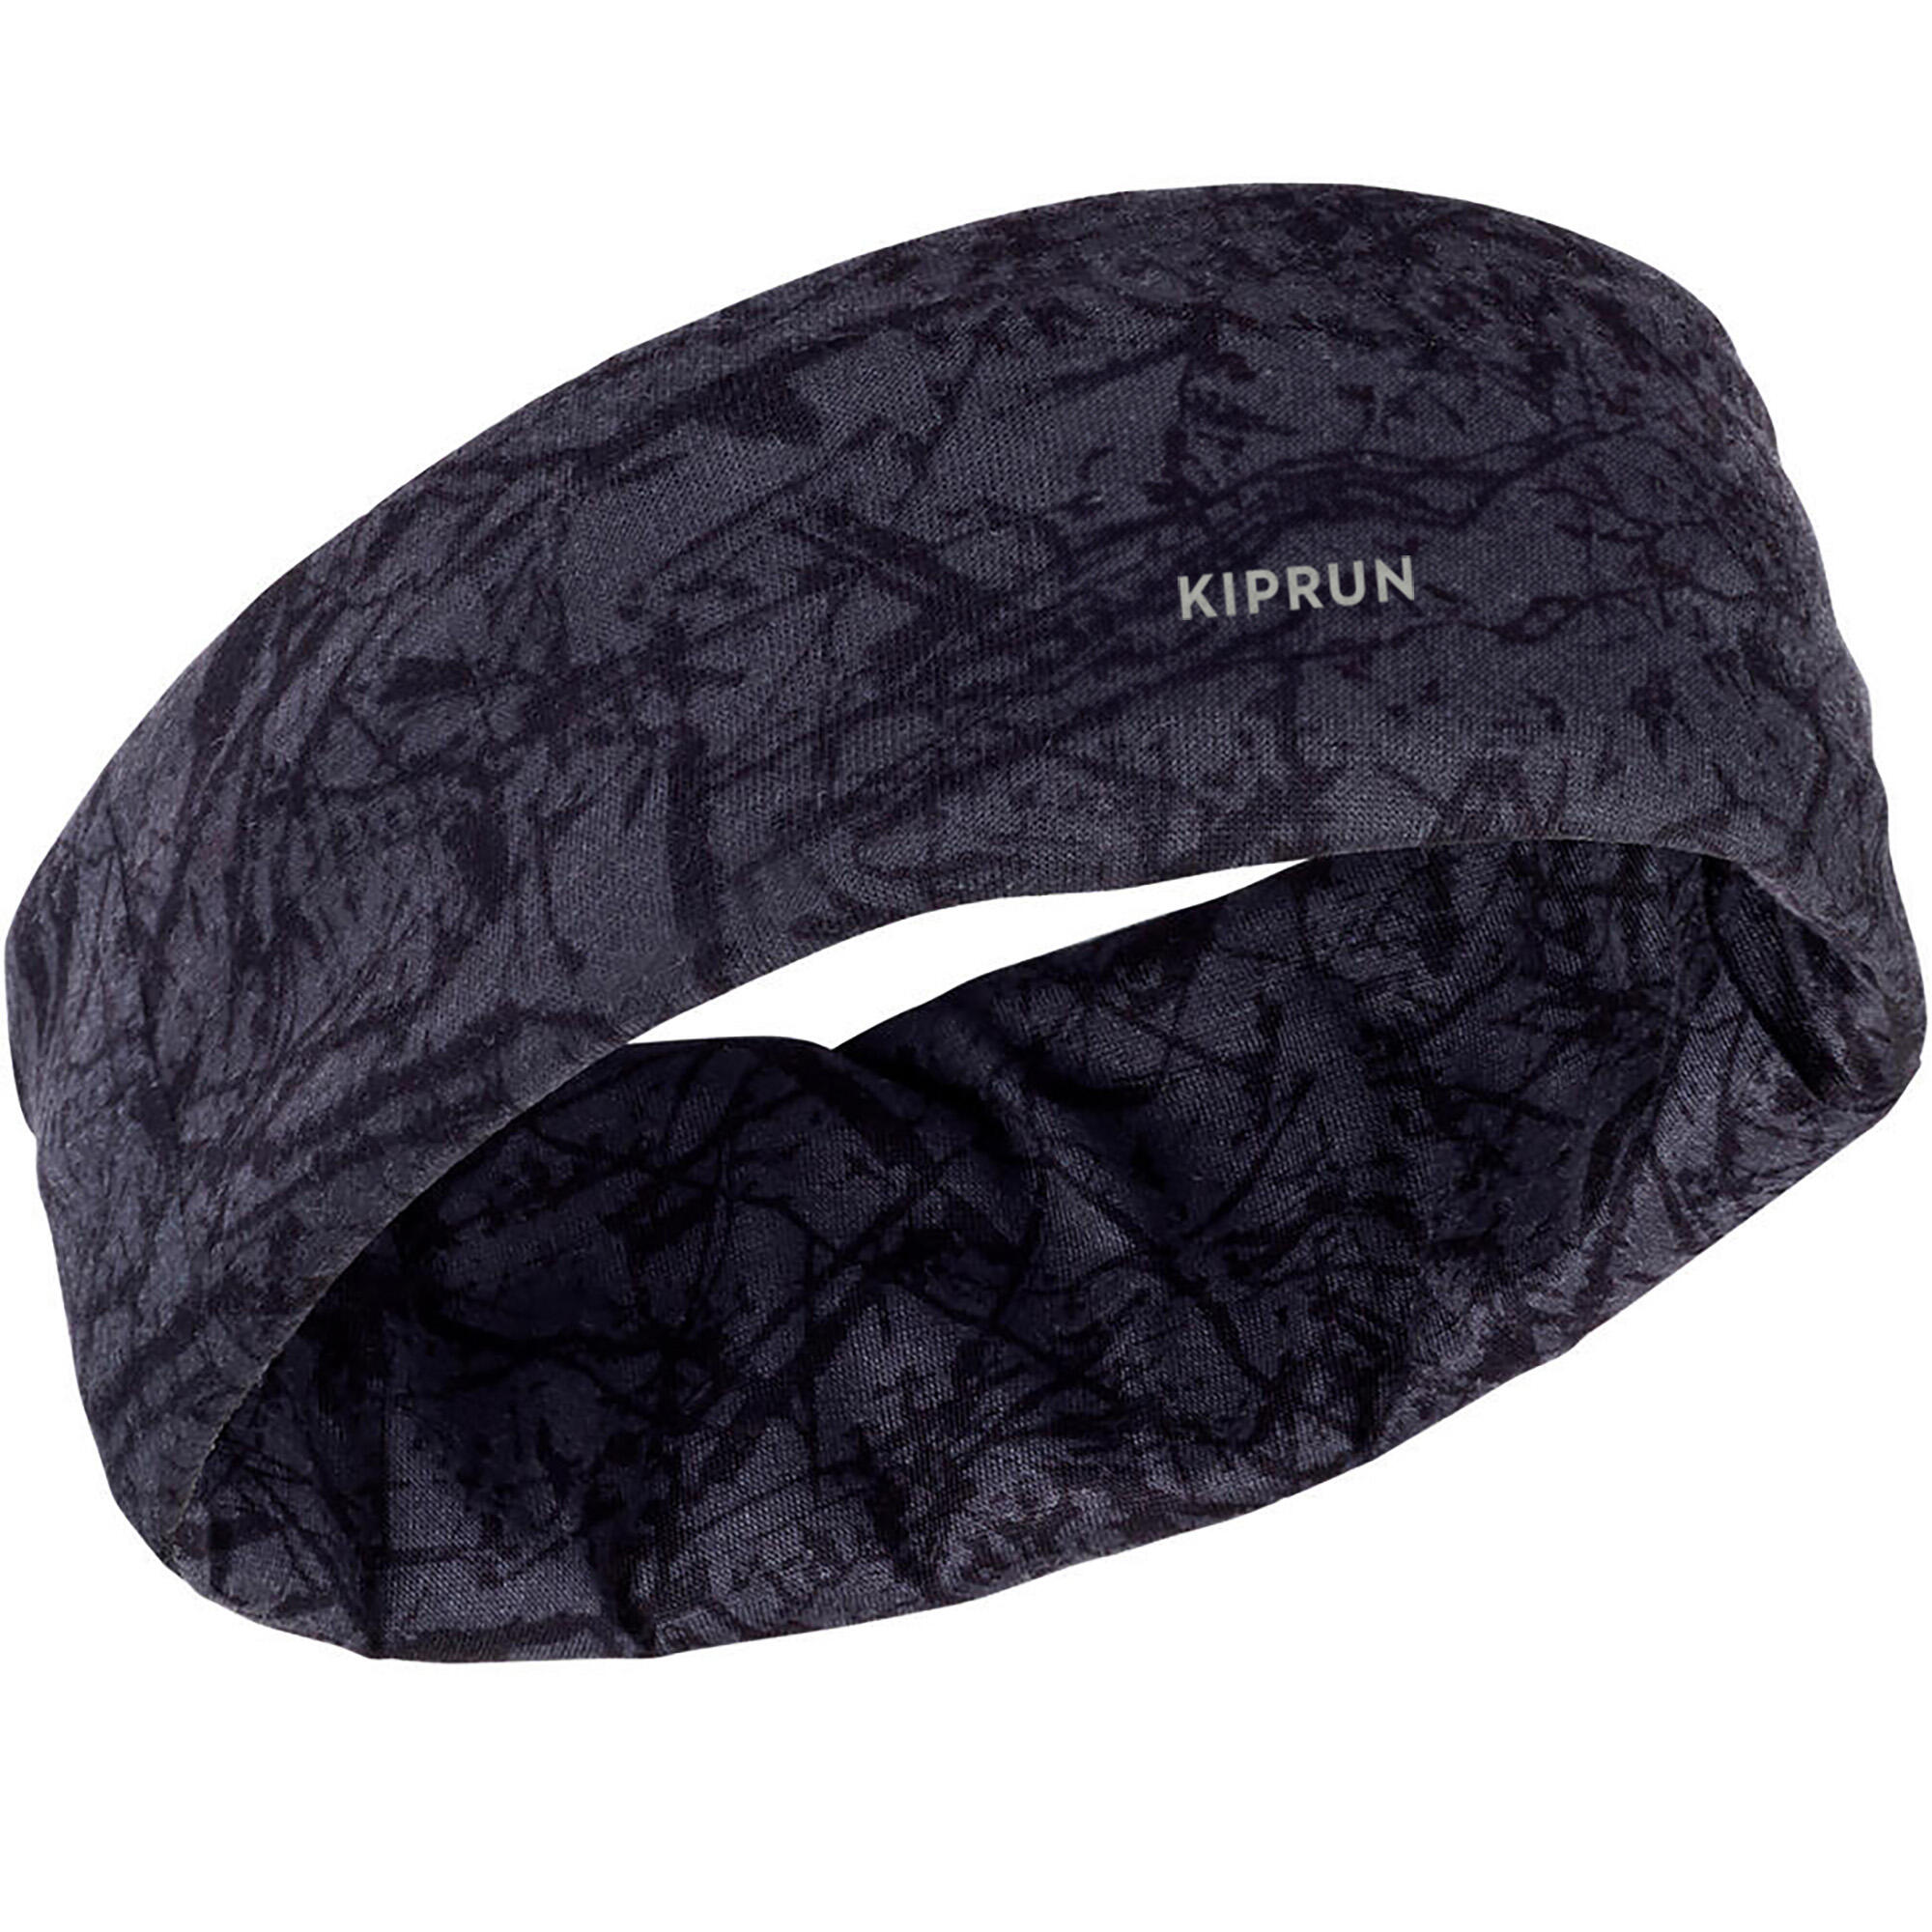 KIPRUN unisex running neck warmer/multi-function headband - black/camo/grey 5/5